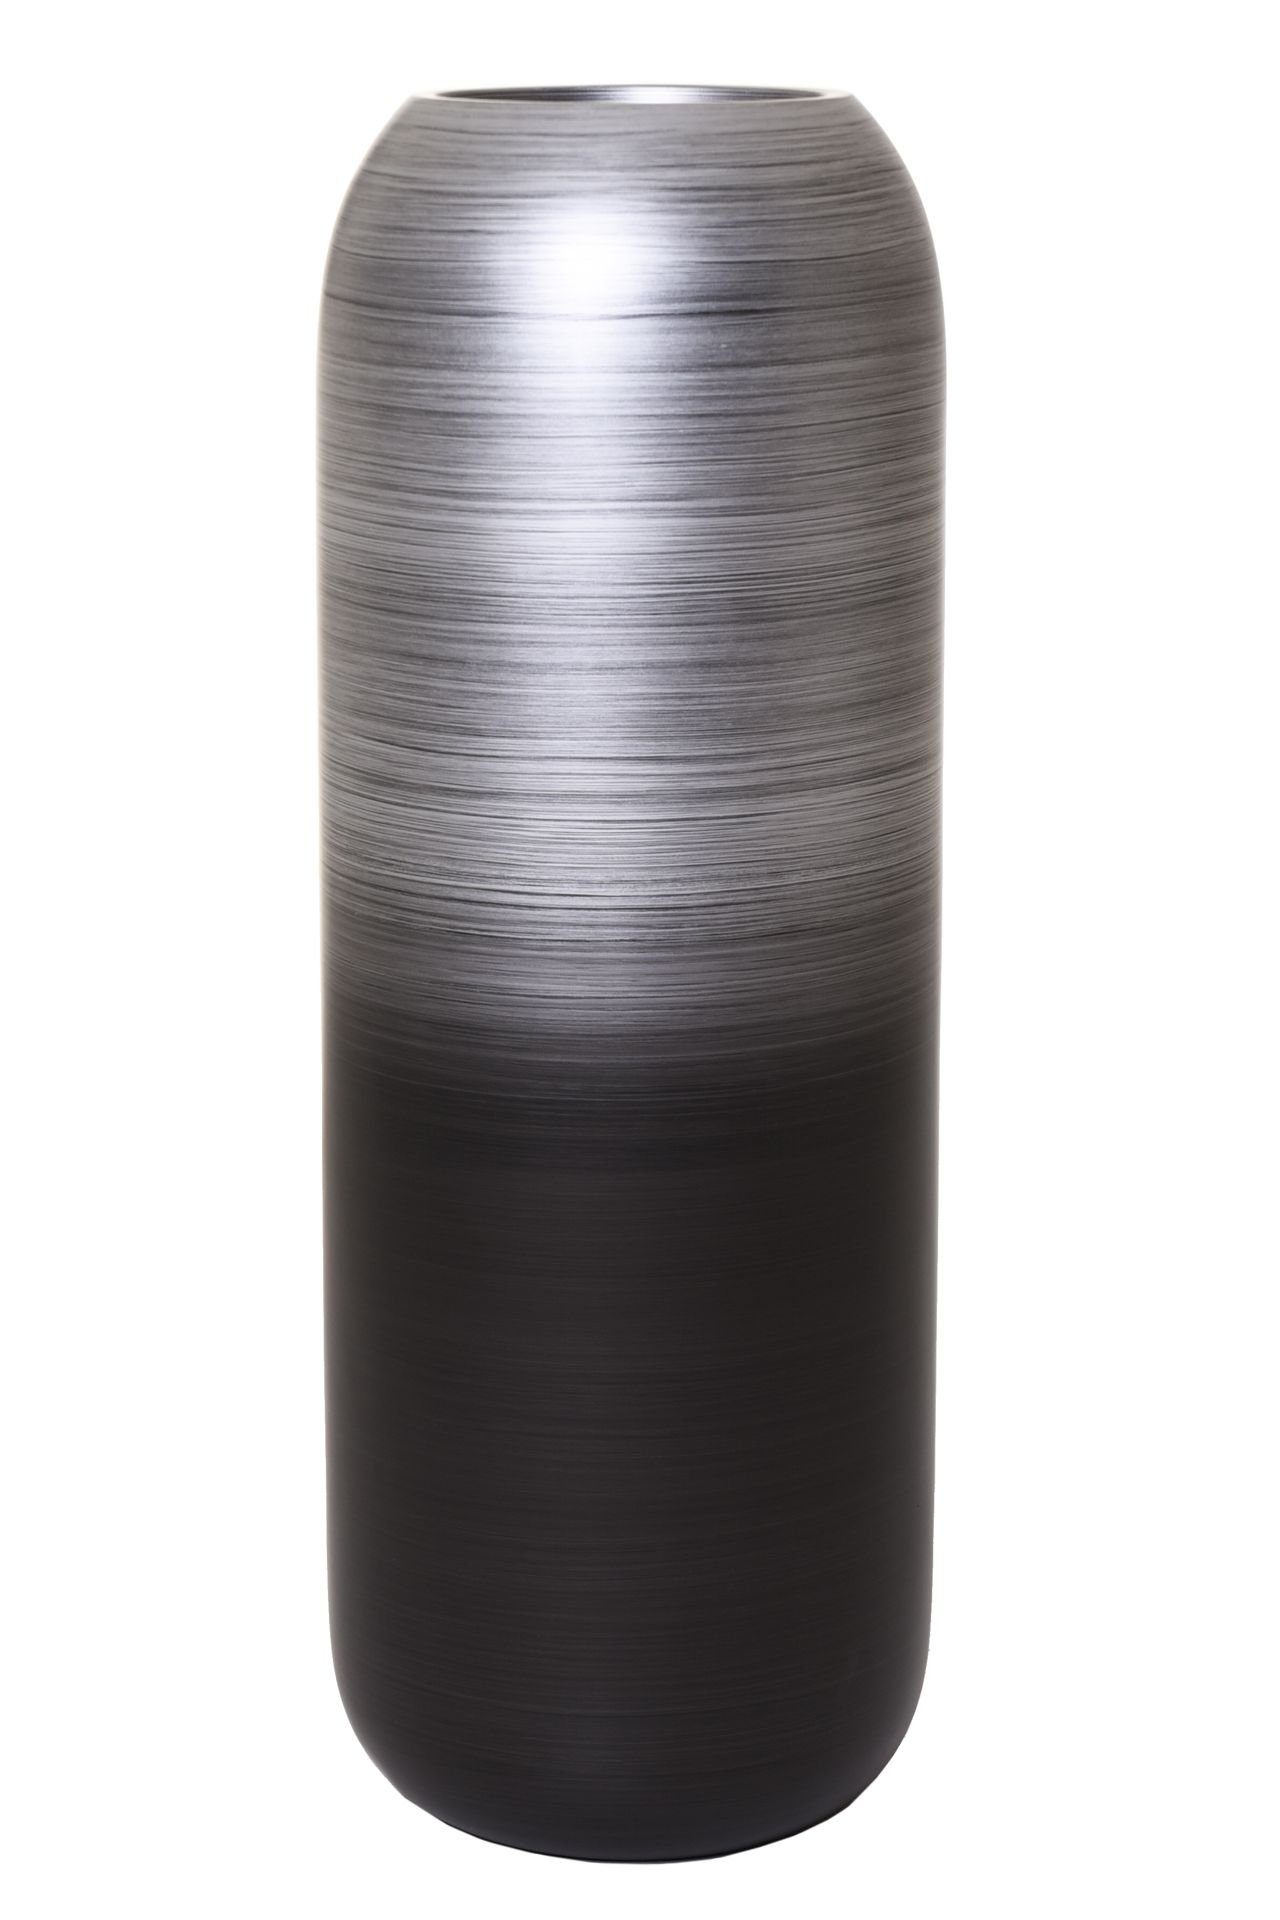 Silber Pflanzkübel VIVANNO Schwarz Bodenvase CHRONO Seidenmatt Schwarz-Silber Bodenvase - Fiberglas